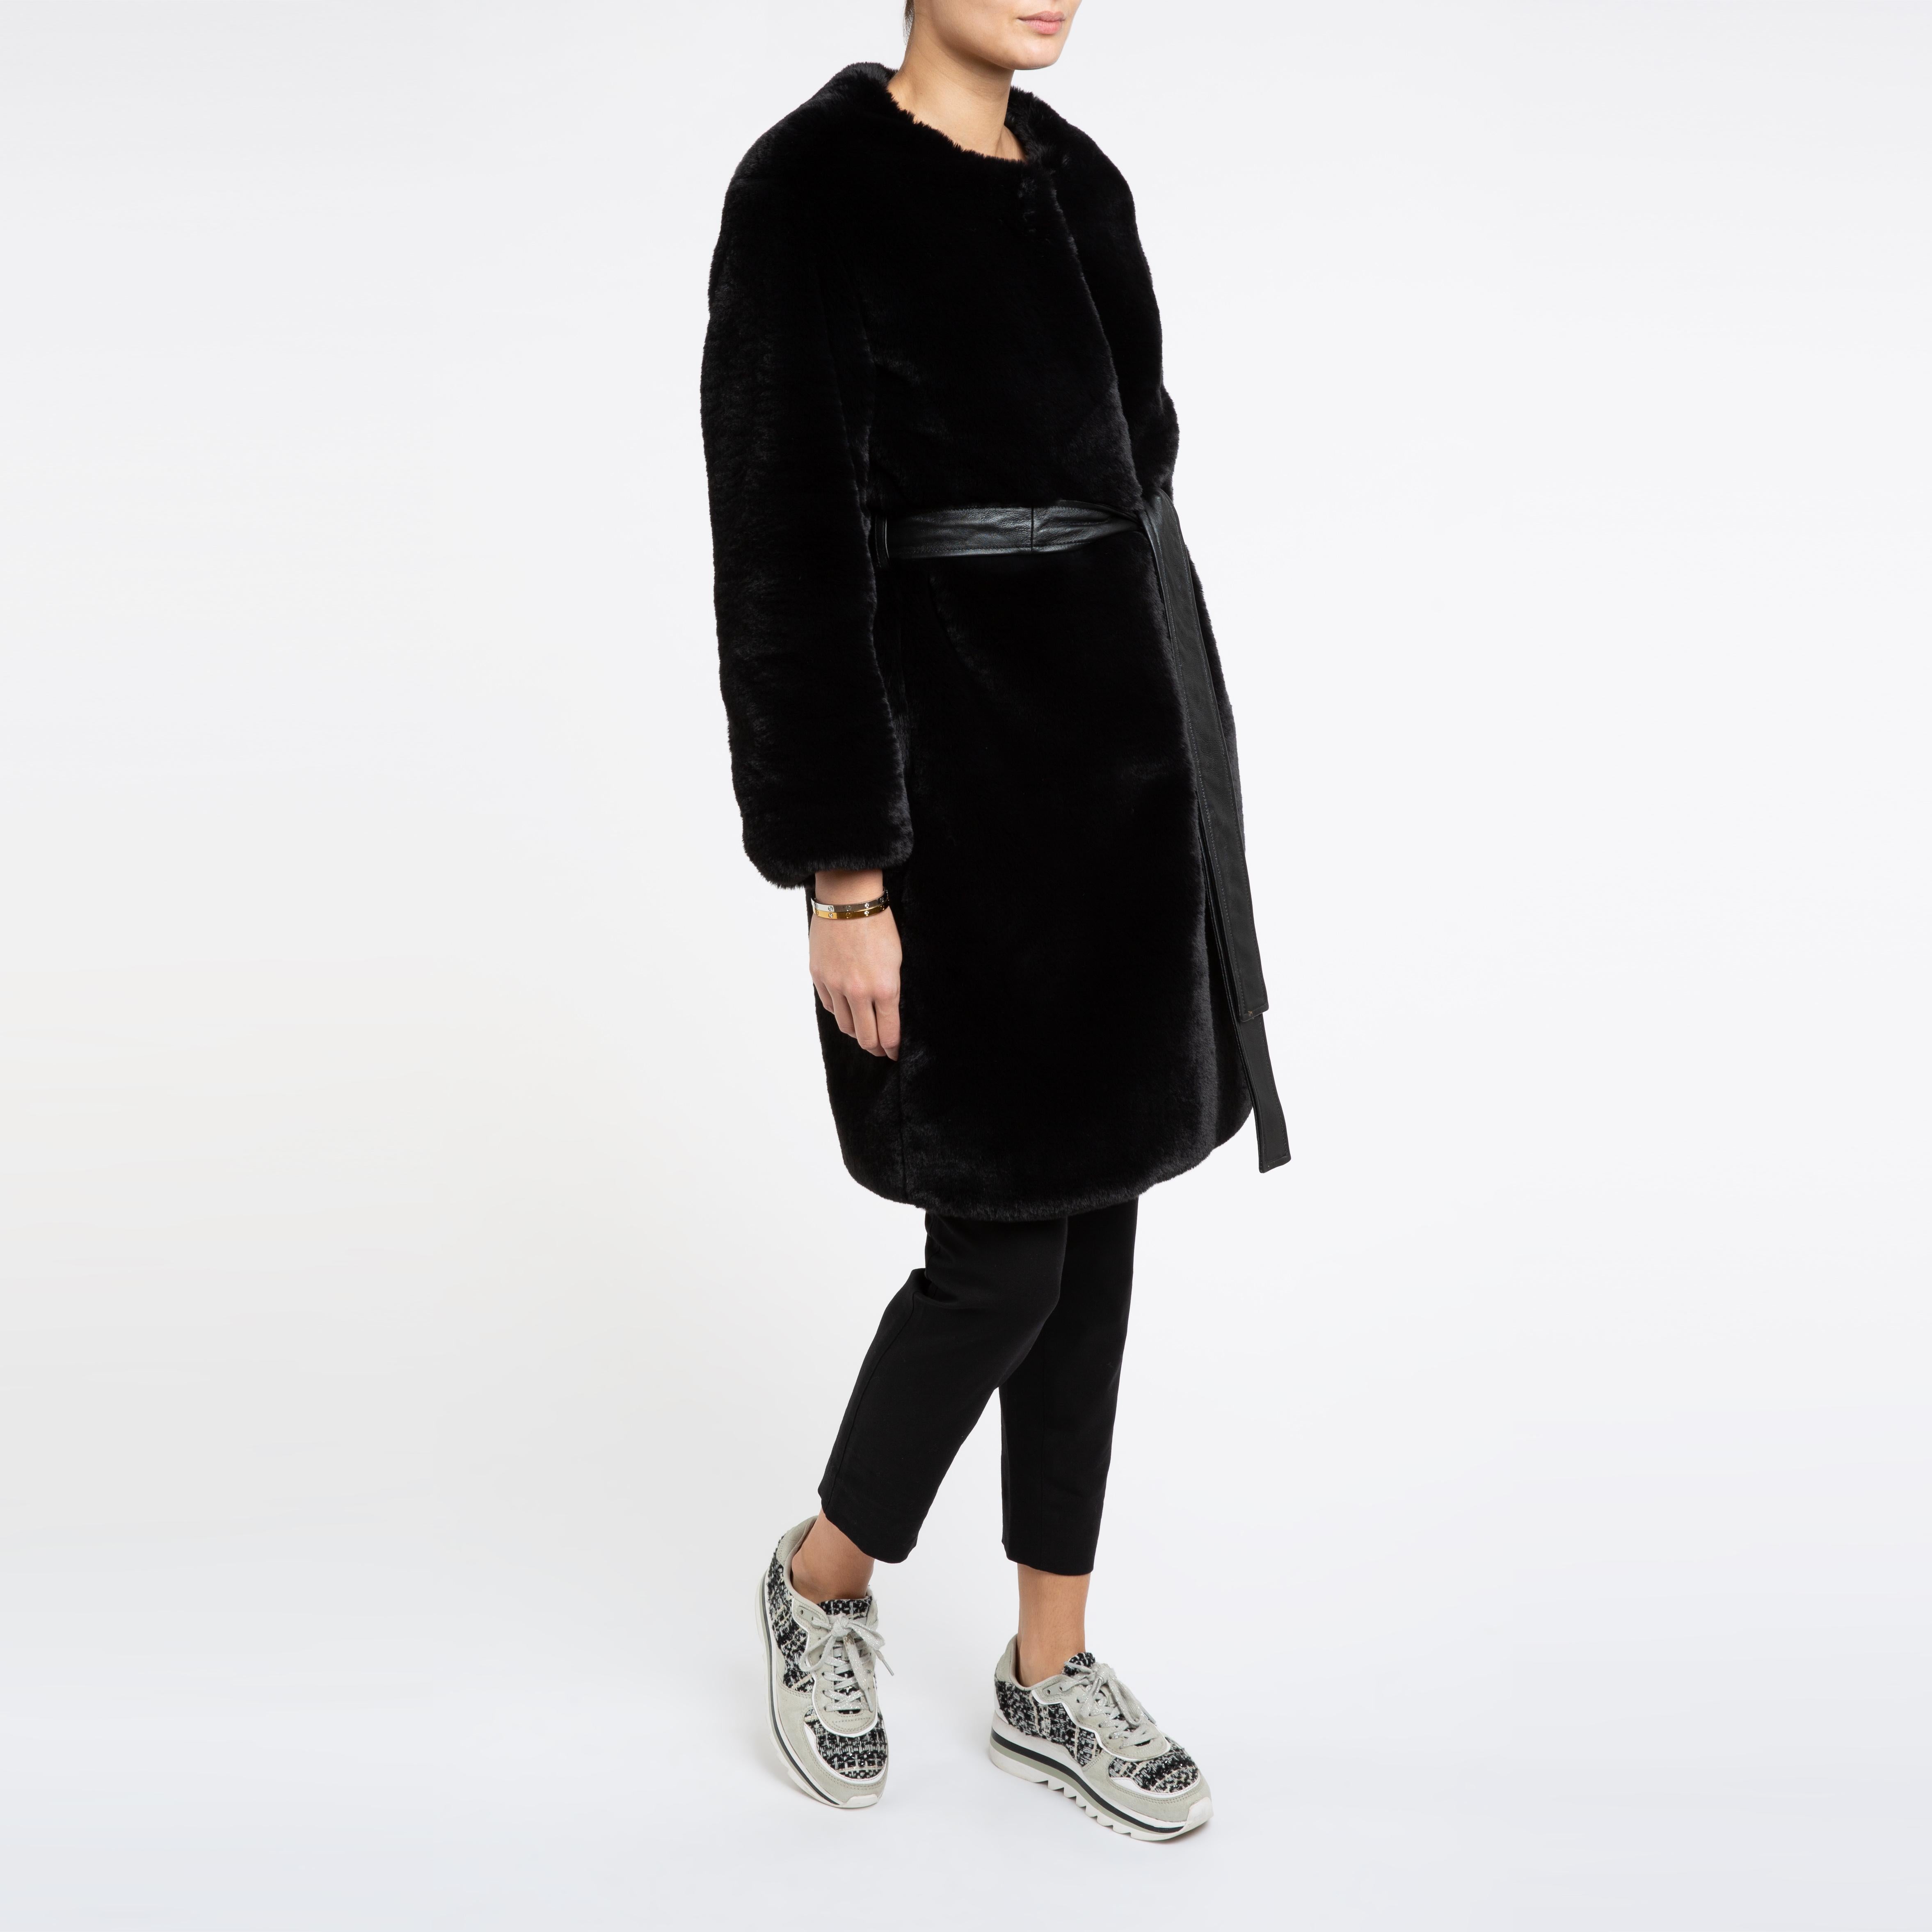 Verheyen London Serena  Collarless Faux Fur Coat in Black - Size uk 8  2